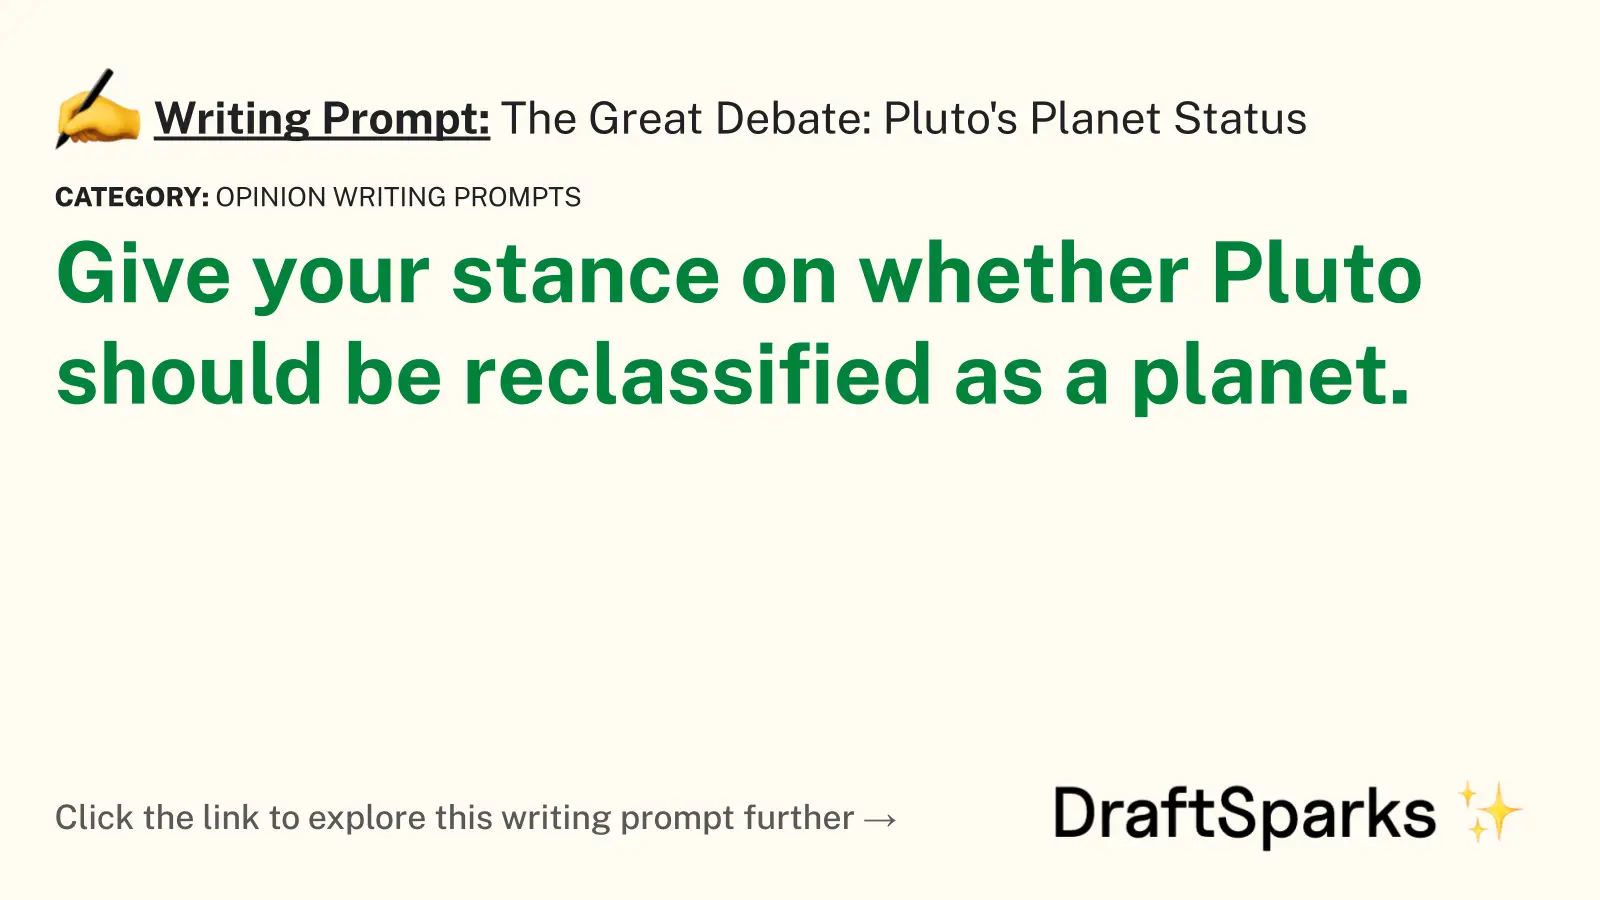 The Great Debate: Pluto’s Planet Status